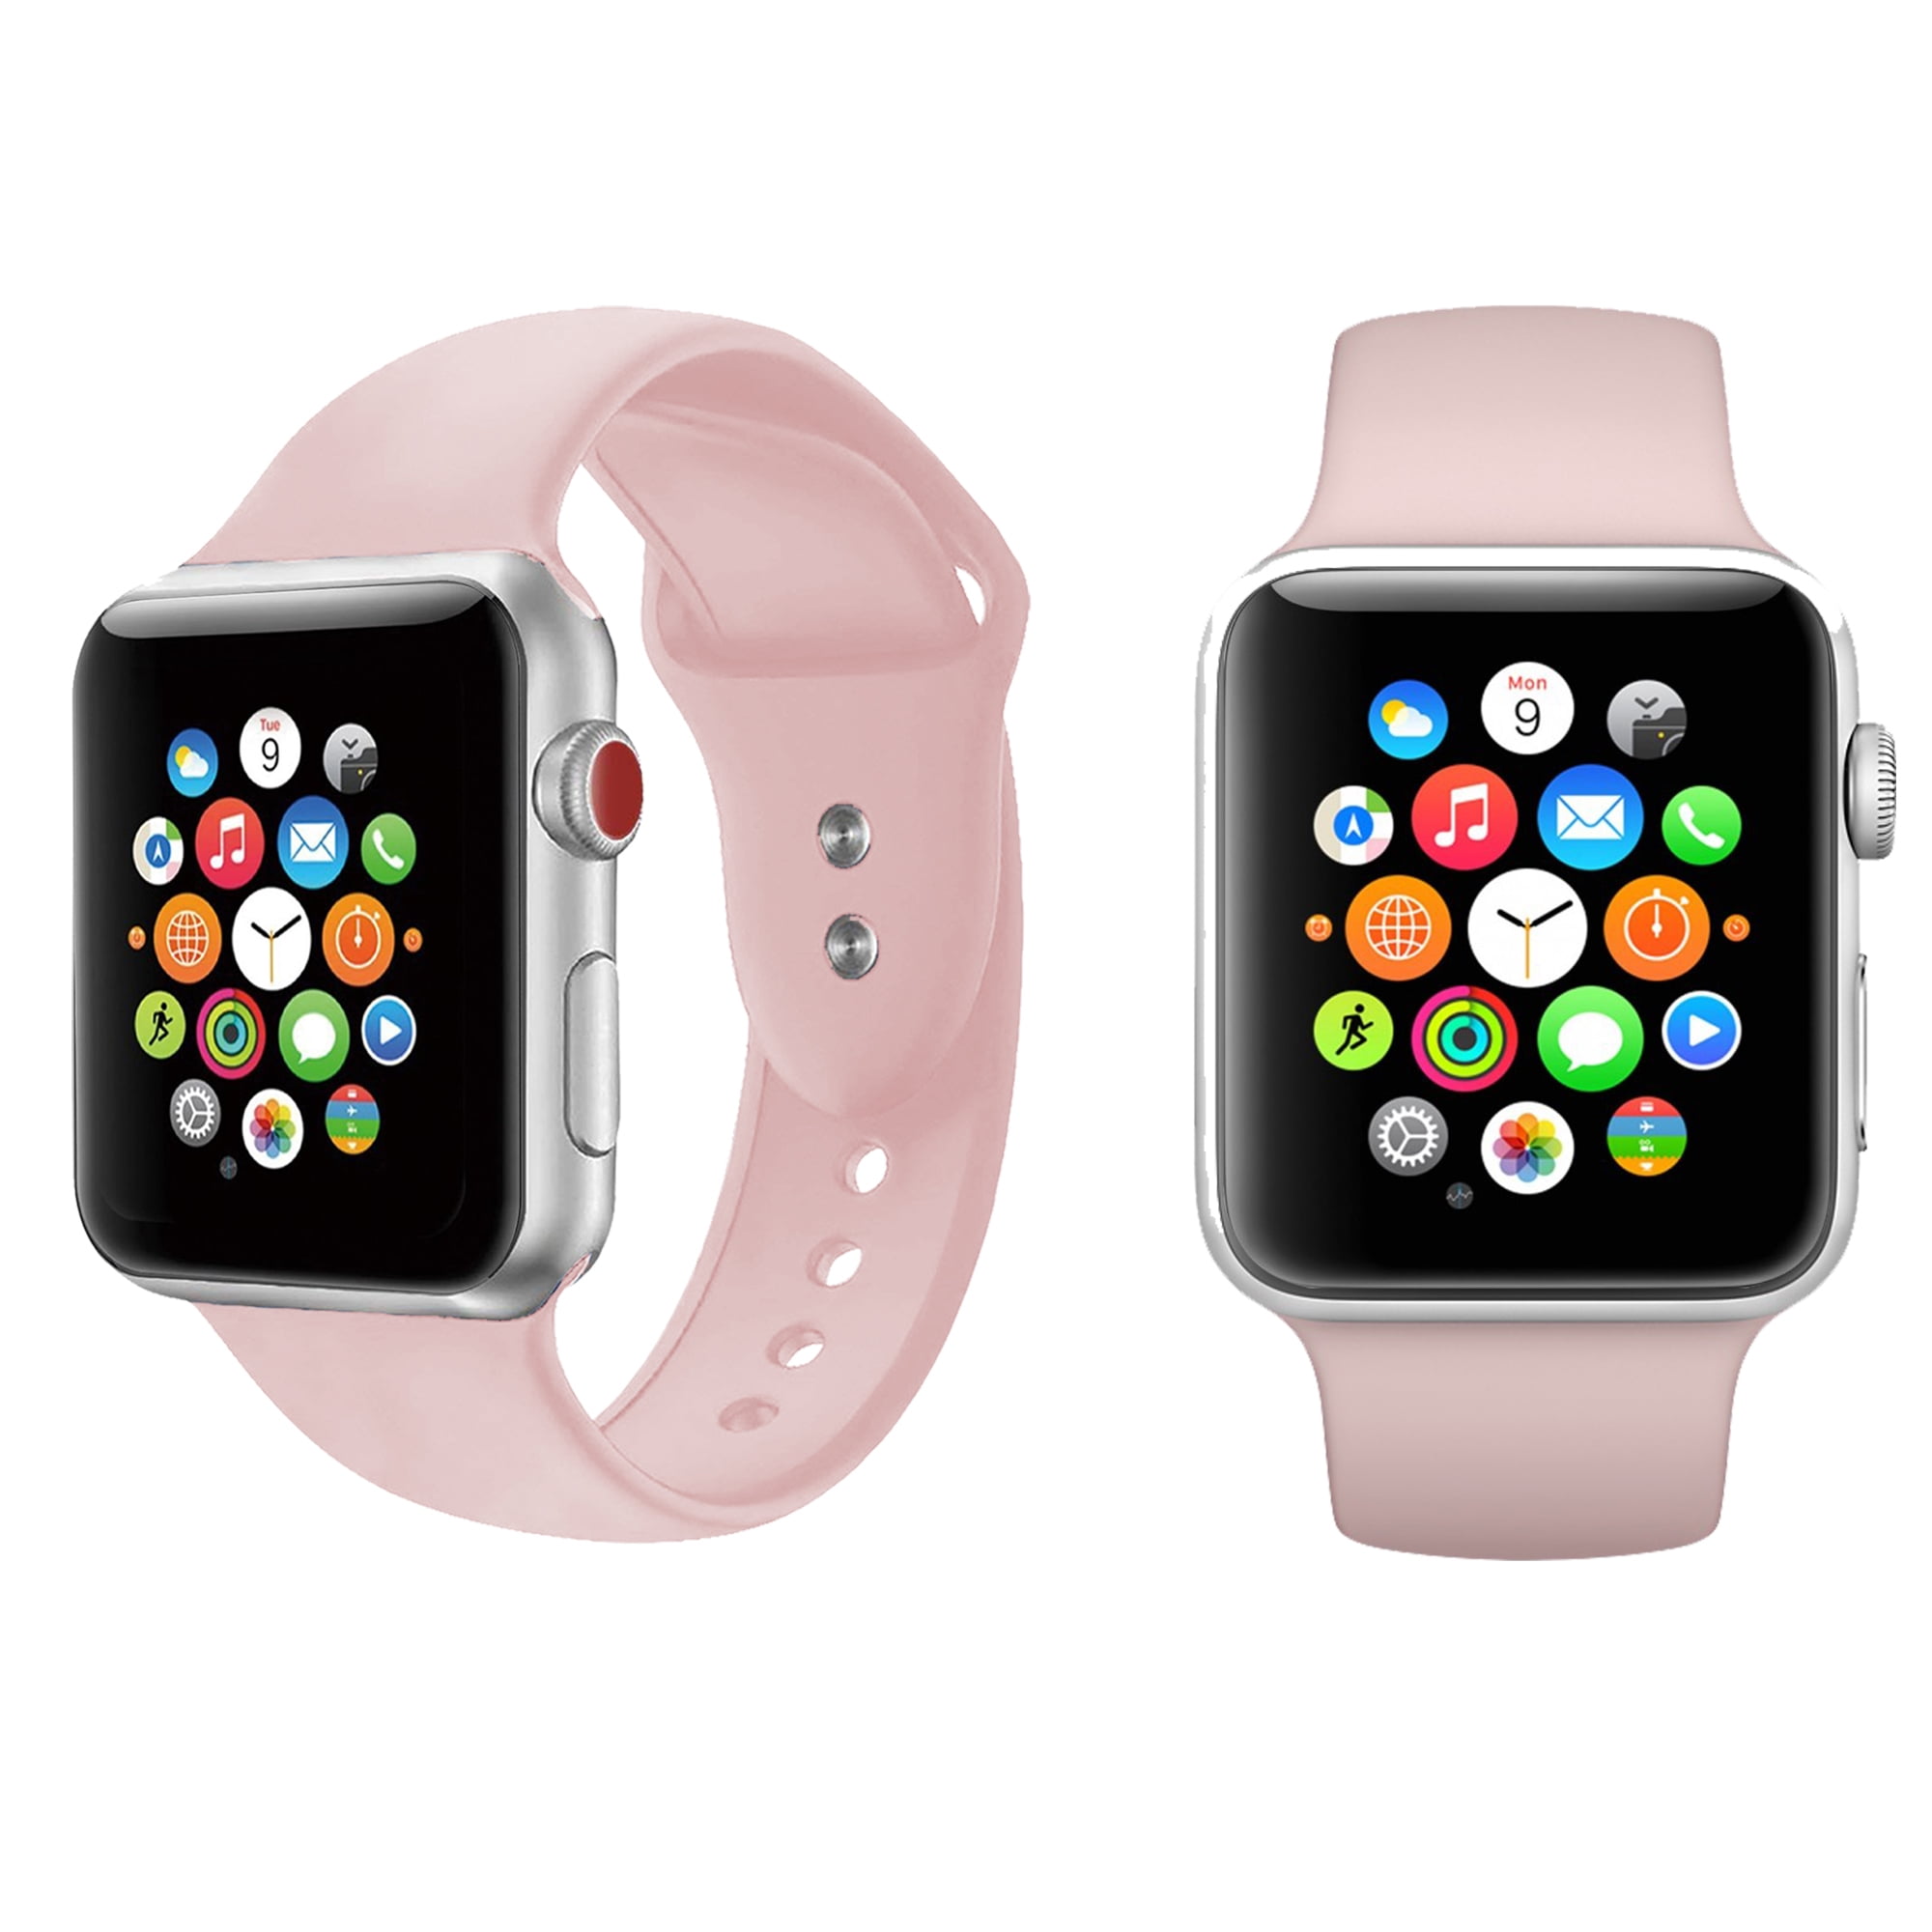 Apple Watch Series 1 Walmart Top Sellers, UP TO 63% OFF | www 